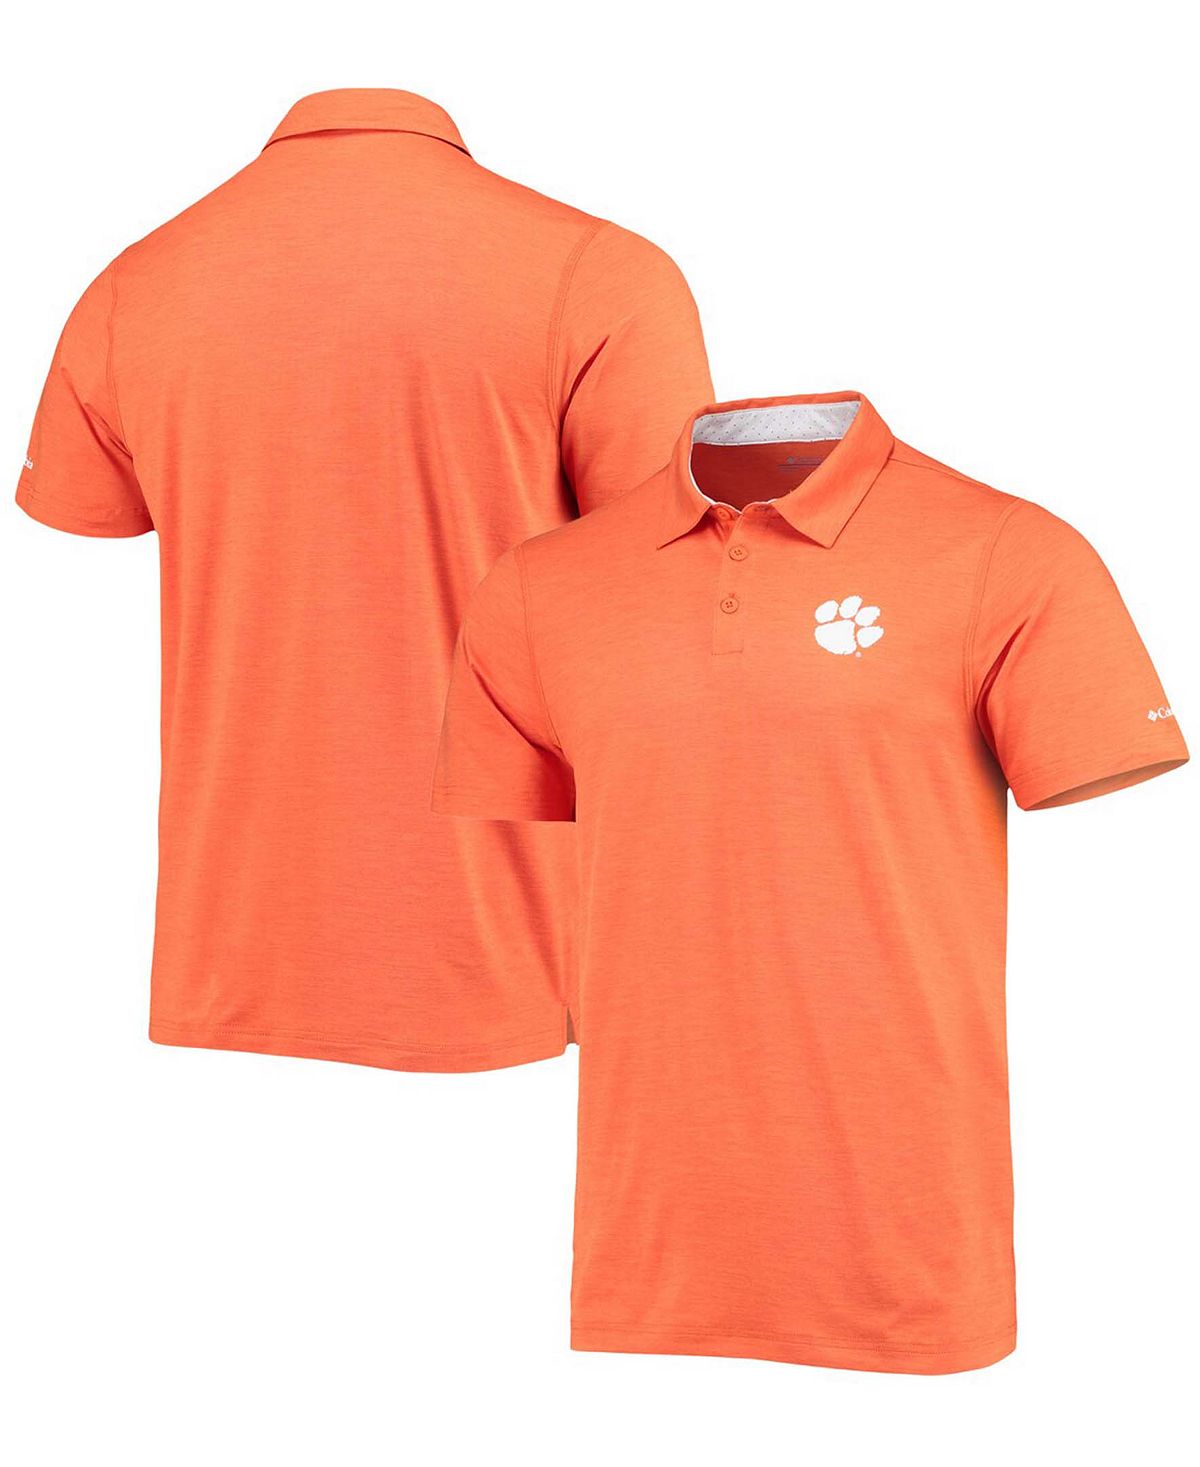 Мужская оранжевая рубашка-поло омни-оттенка Clemson Tigers Tech Trail Space Dye Columbia columbia худи columbia disney tech trail energy размер 46